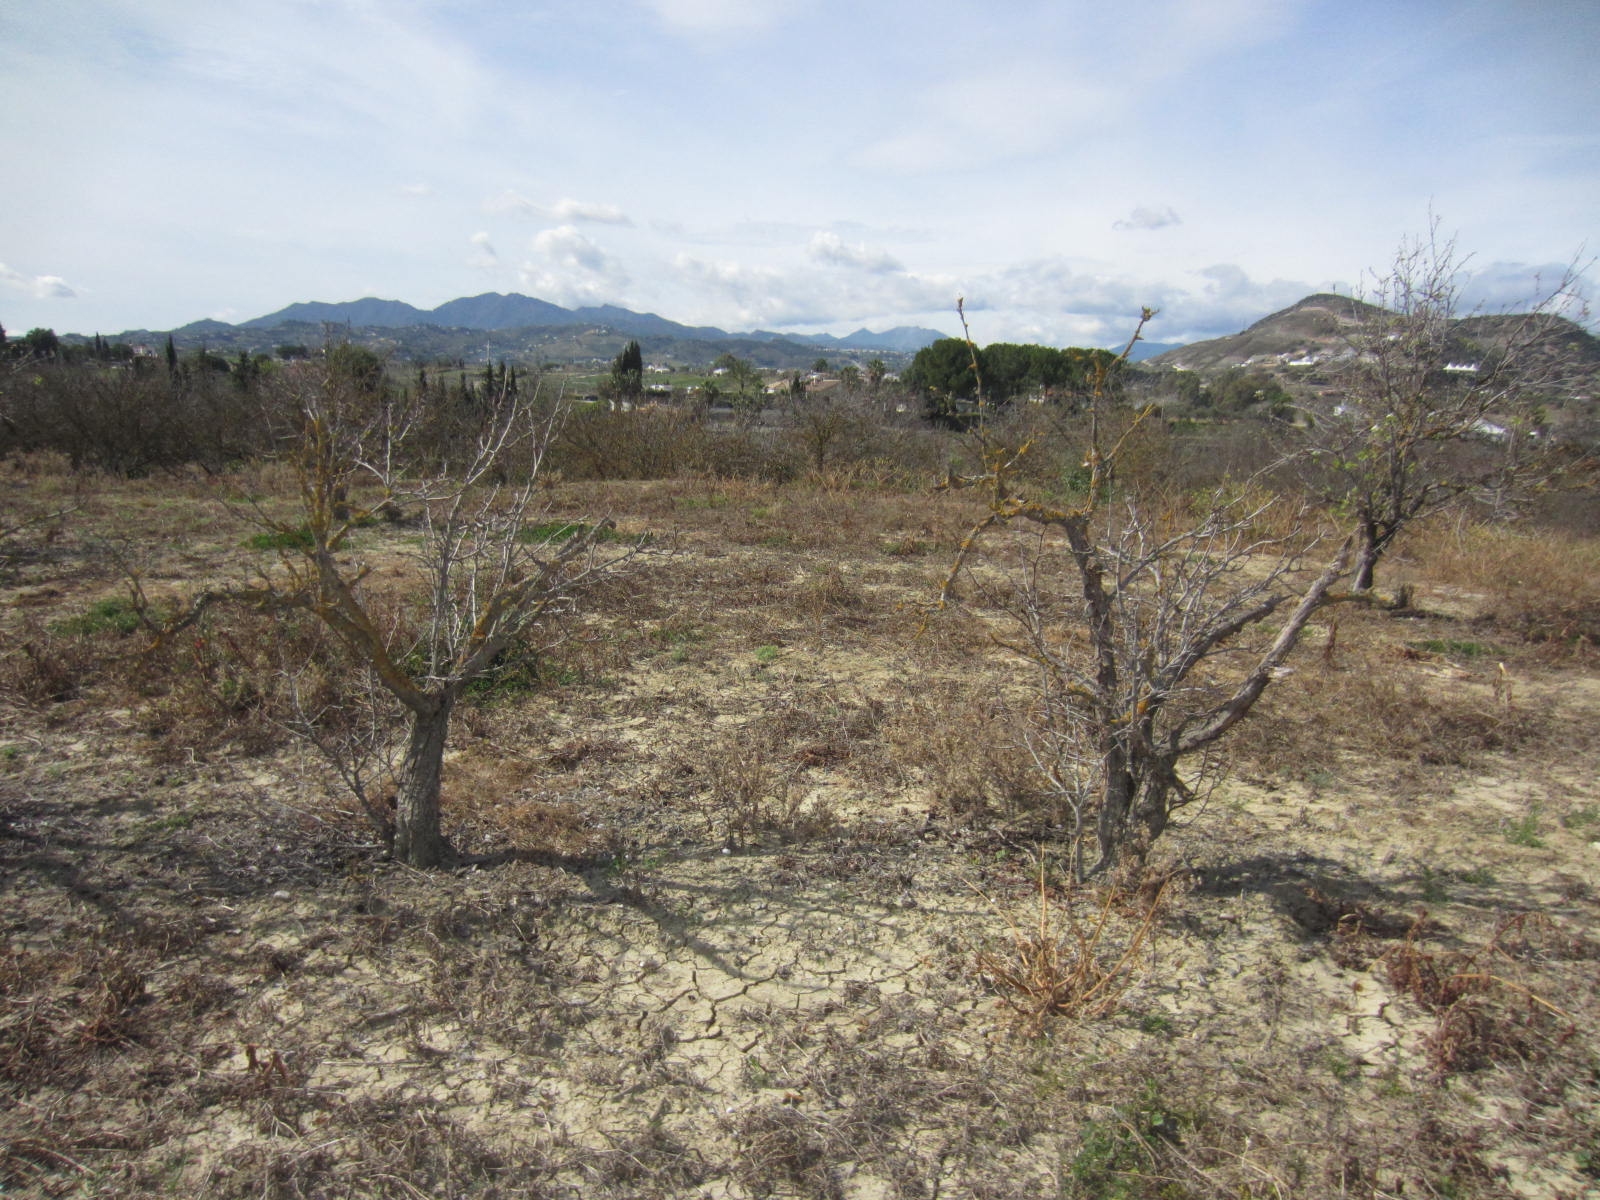 Country Property for sale in Alhaurín el Grande